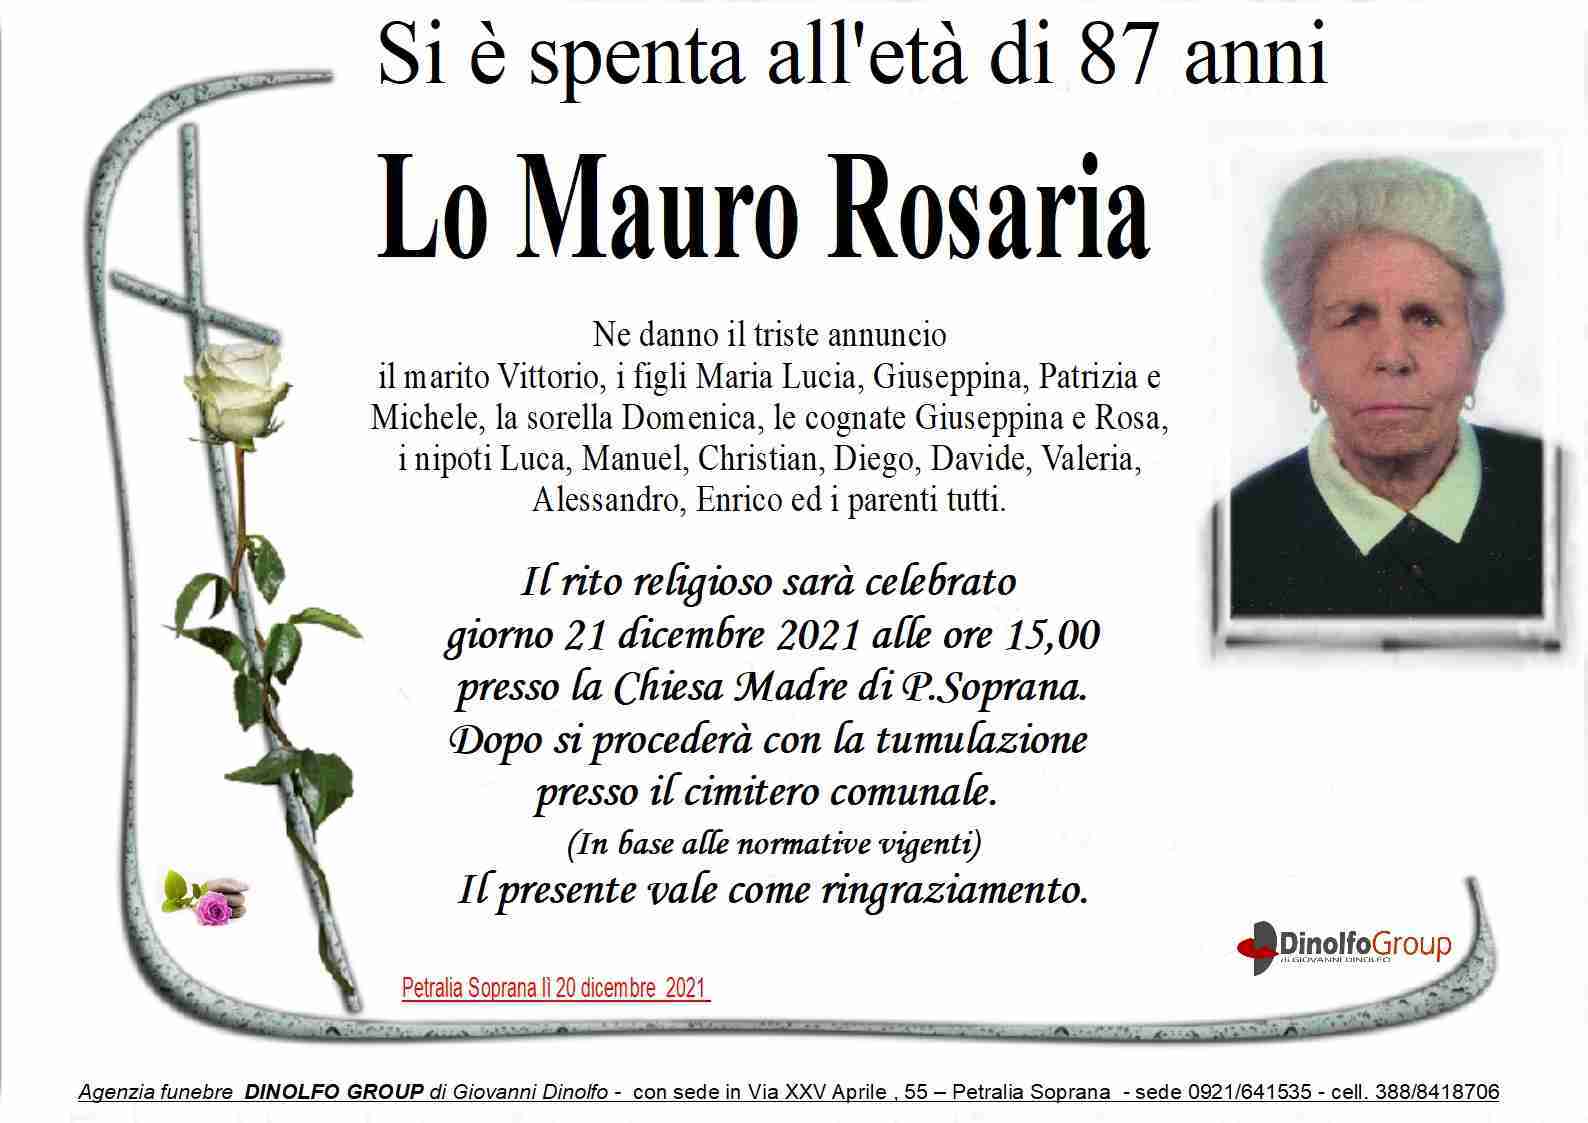 Rosaria Lo Mauro